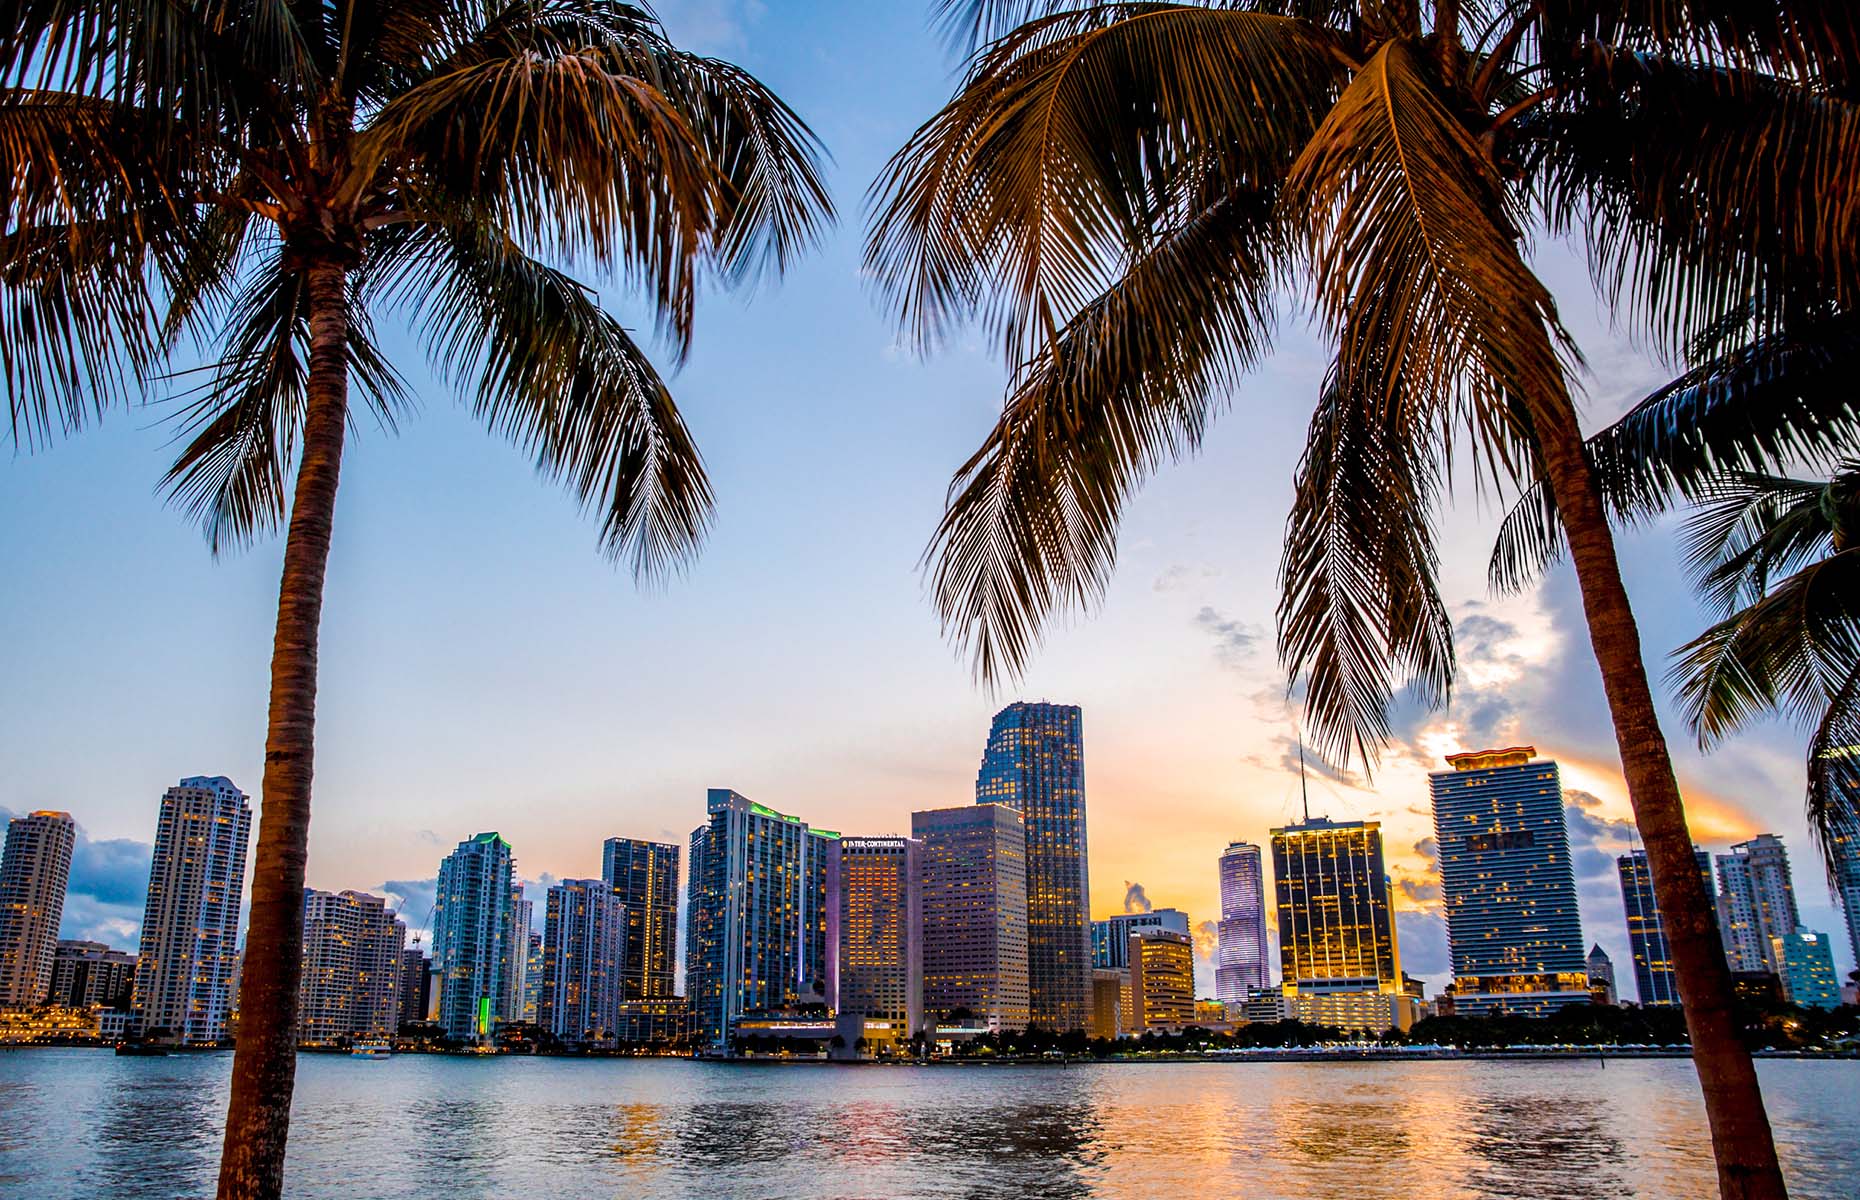 Downtown Miami skyline (Image: littlenySTOCK/Shutterstock)